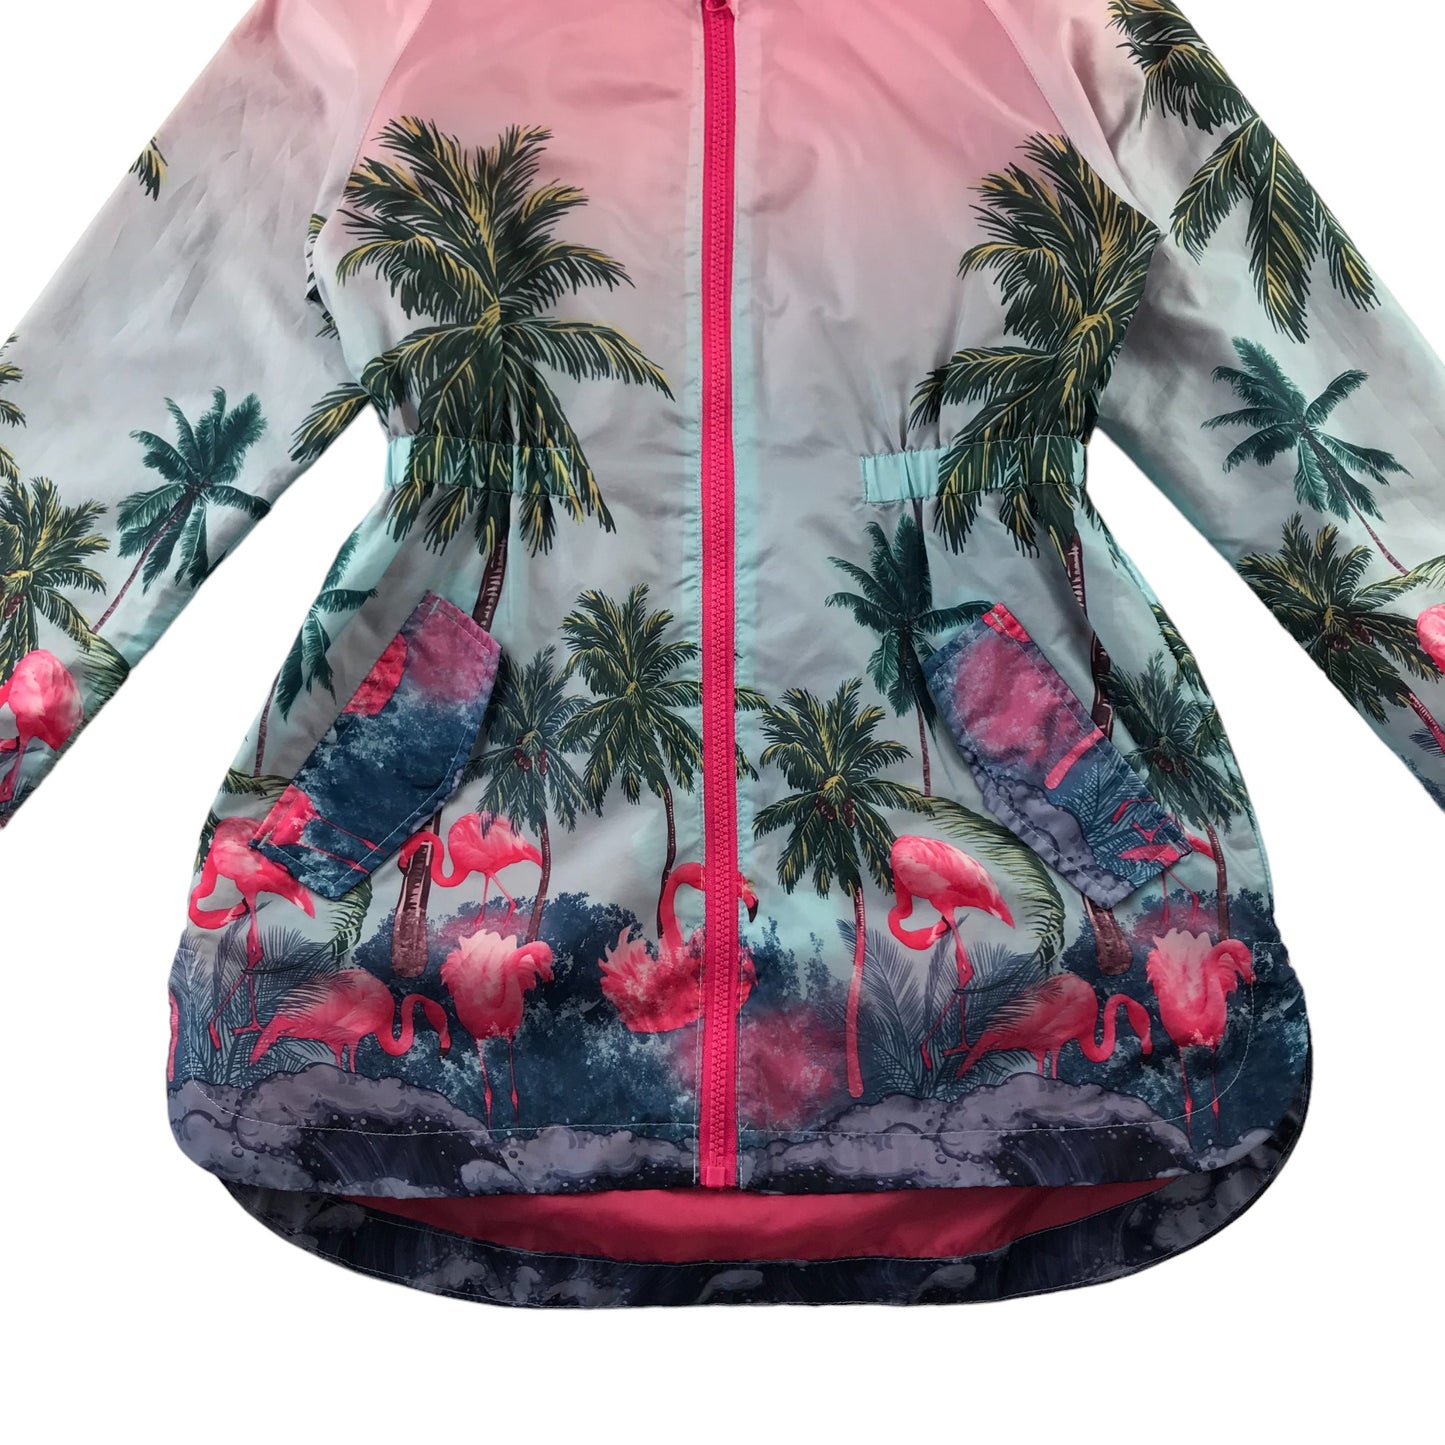 Tu light jacket 9-10 years pink flamingo and palm tree graphic design